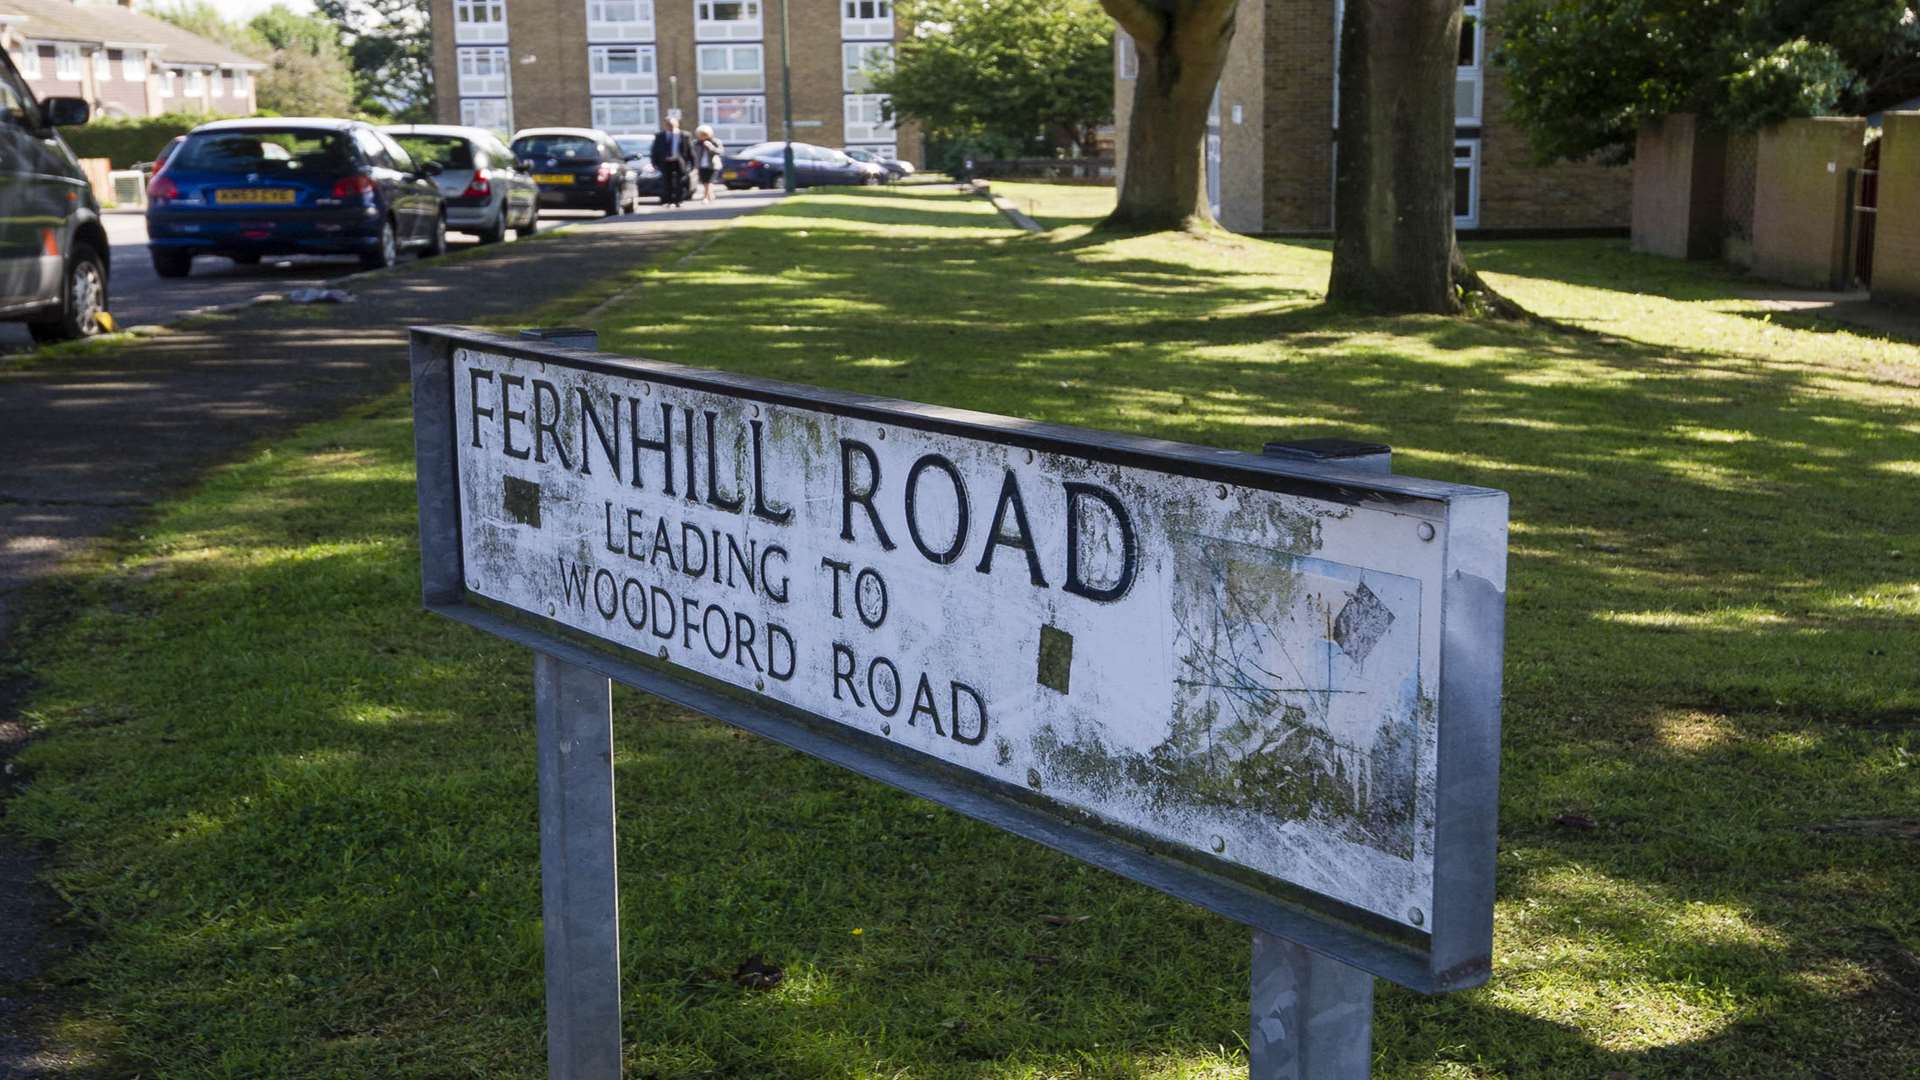 Fernhill Road in Maidstone